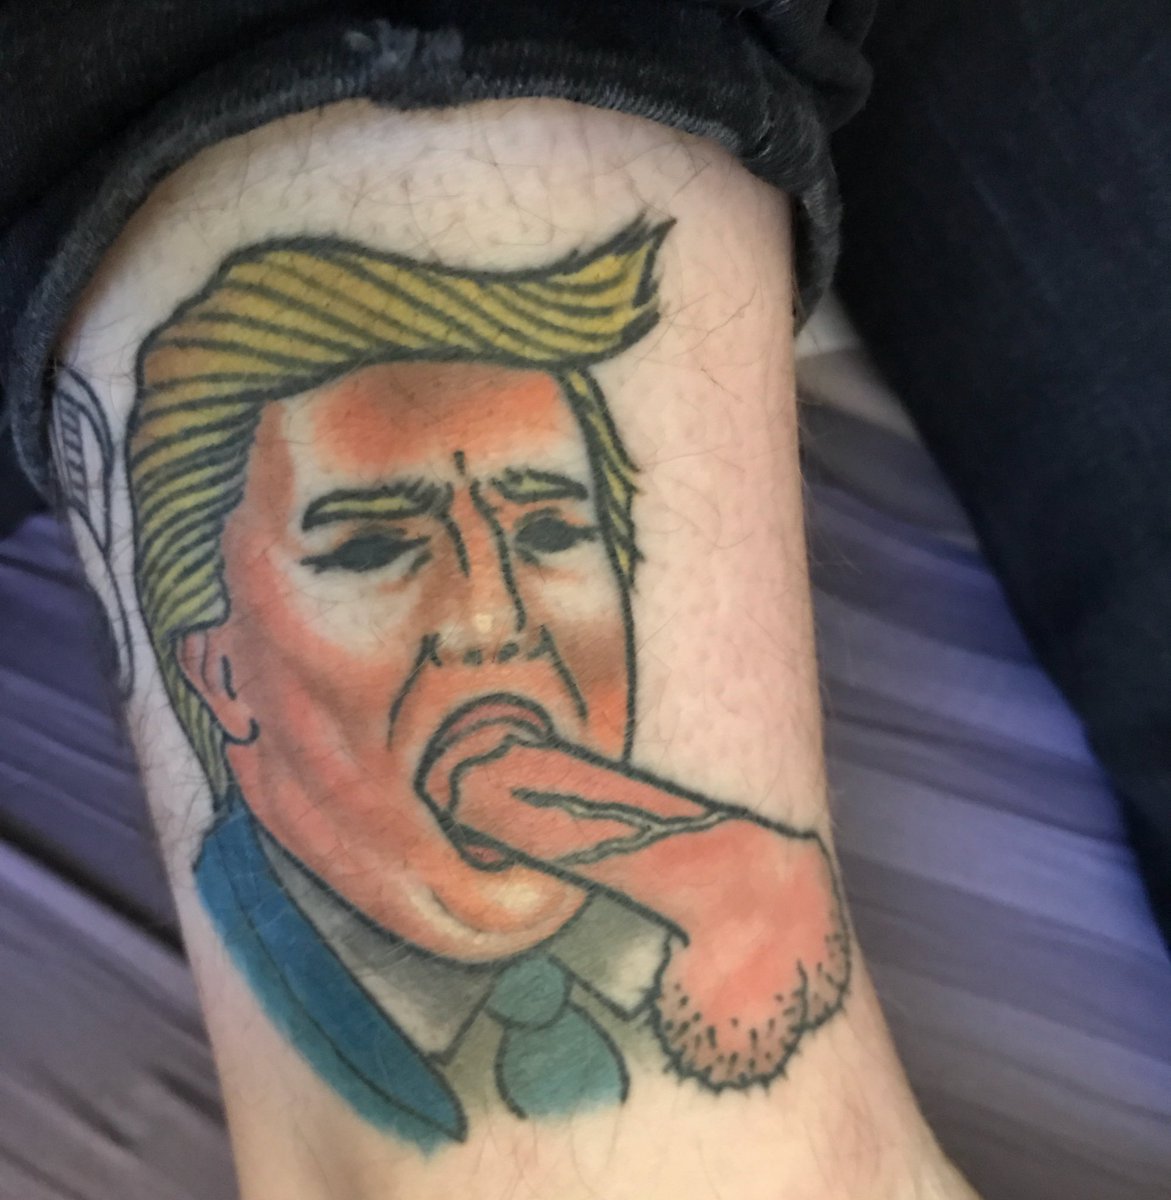 Tatos penis genital tattoo. 